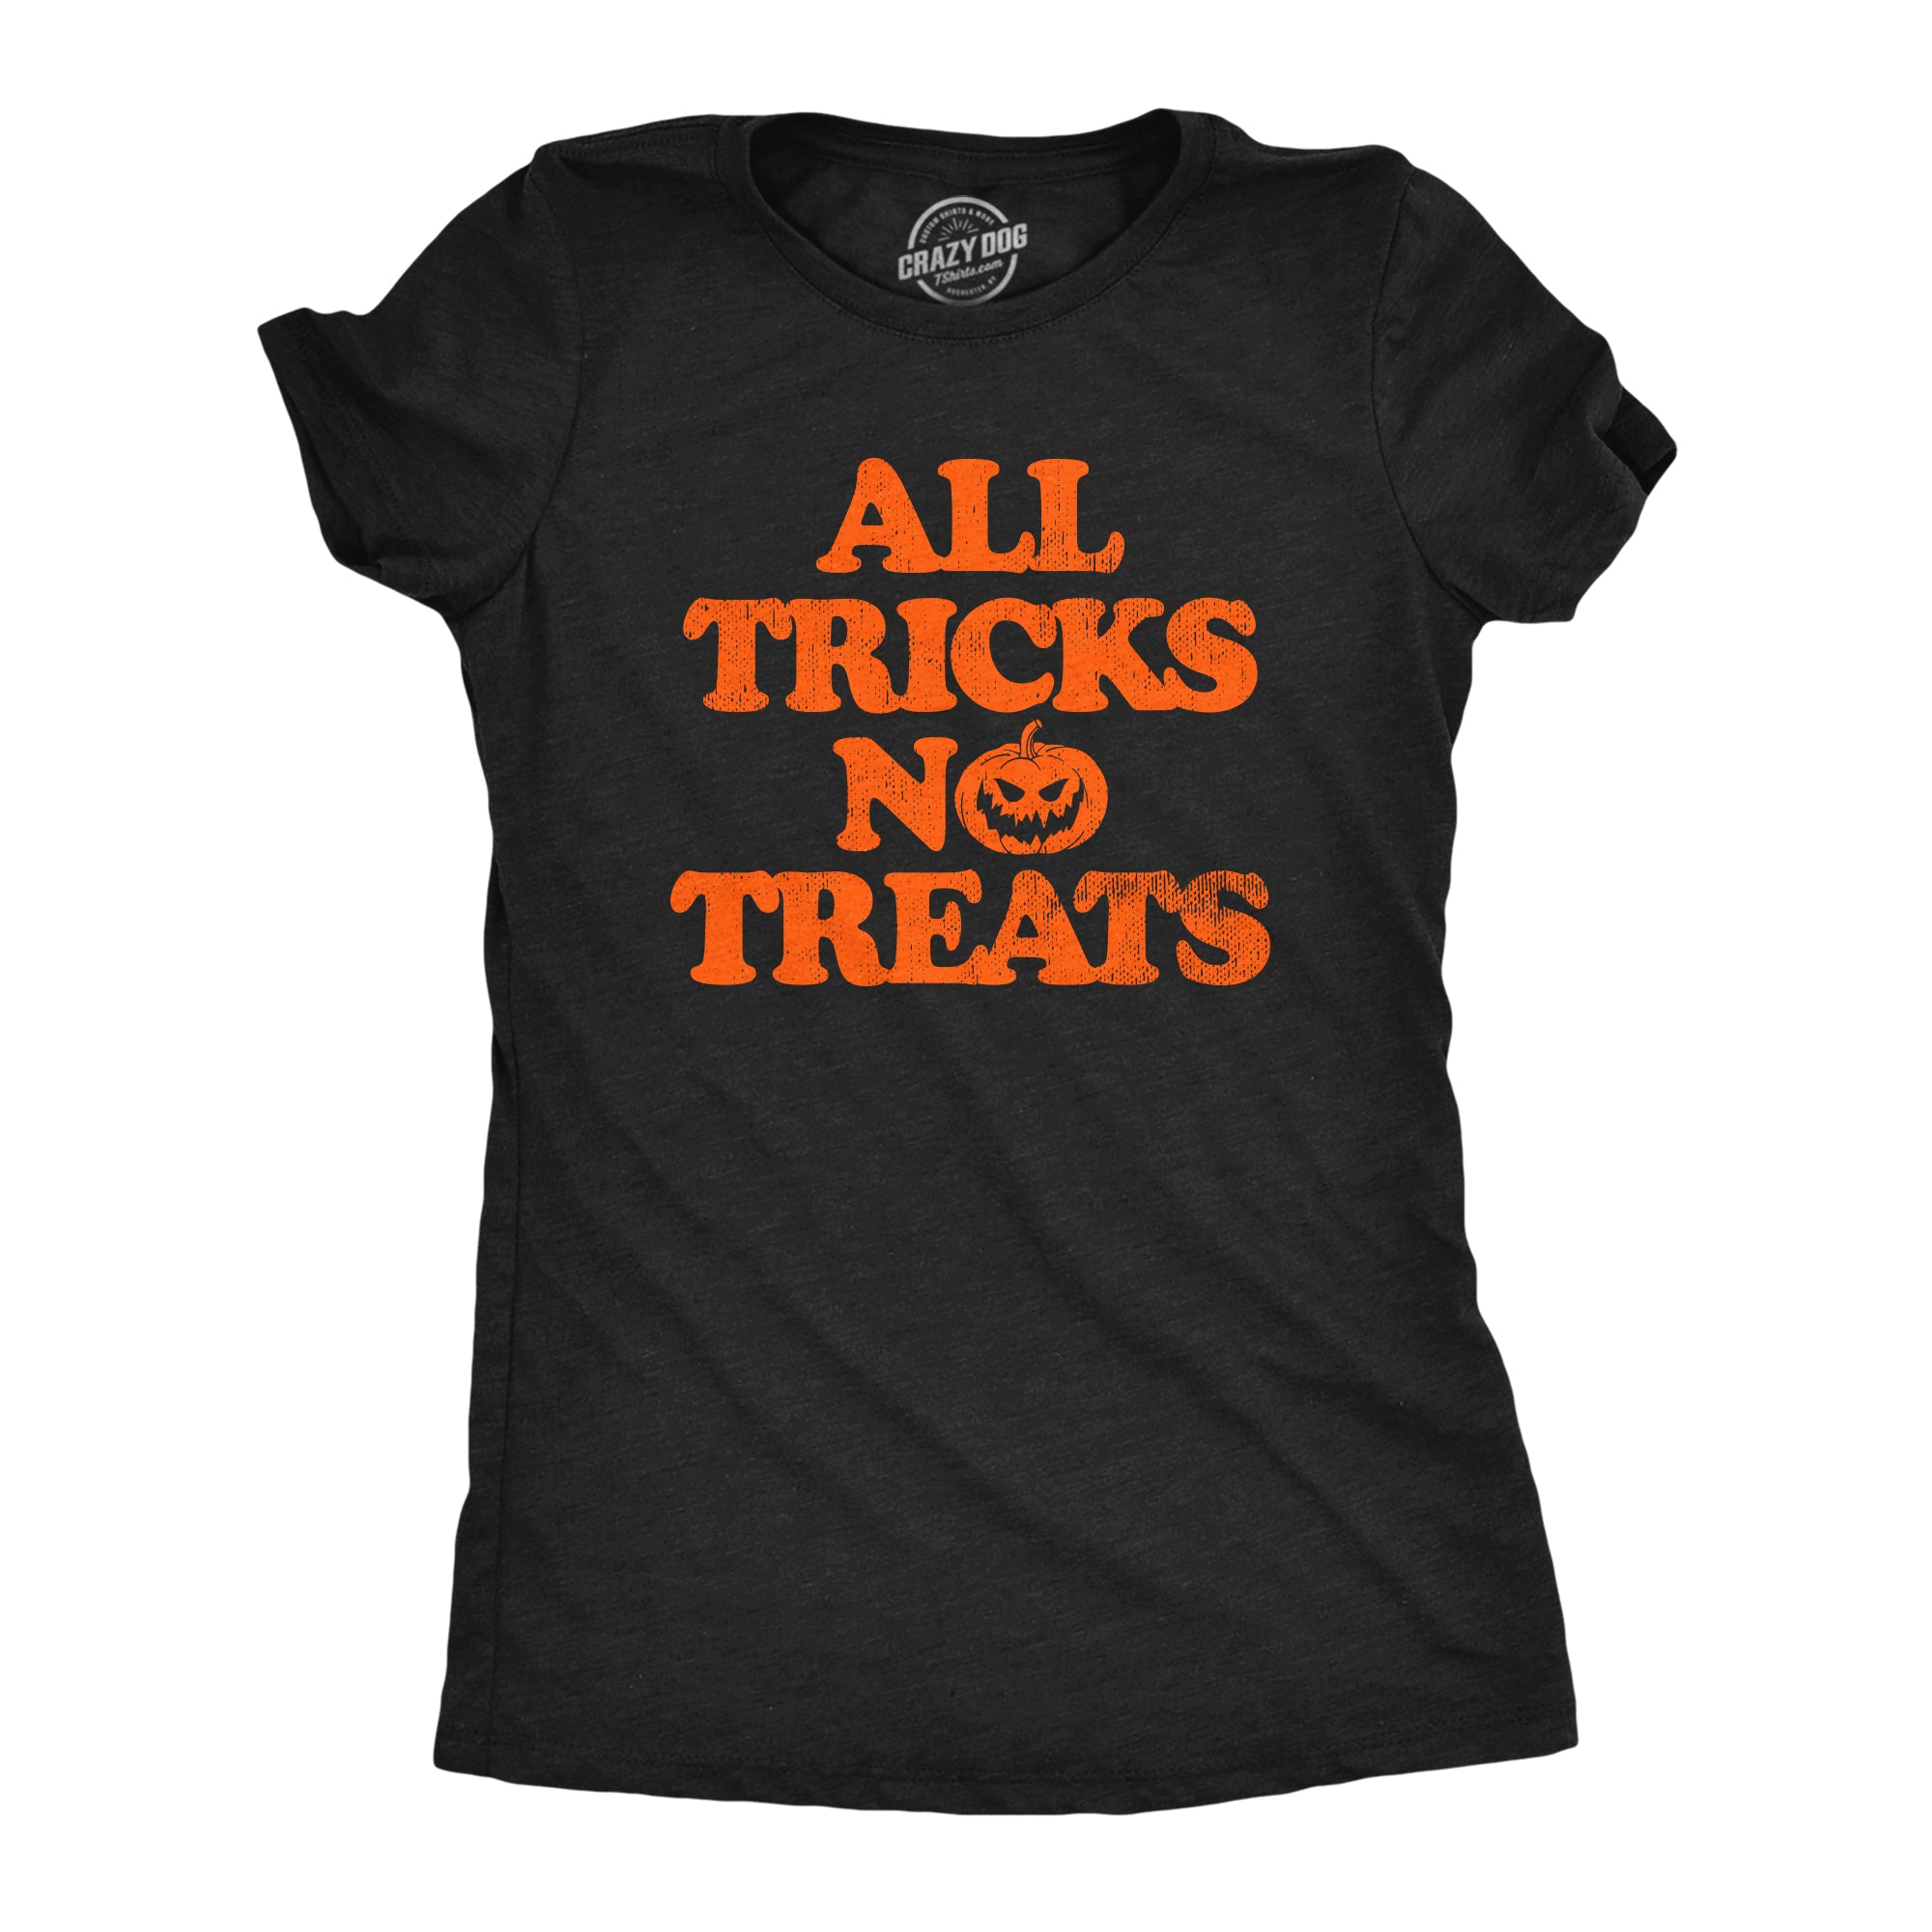 Funny Heather Black - TRICKS All Tricks No Treats Womens T Shirt Nerdy Halloween Sarcastic Tee